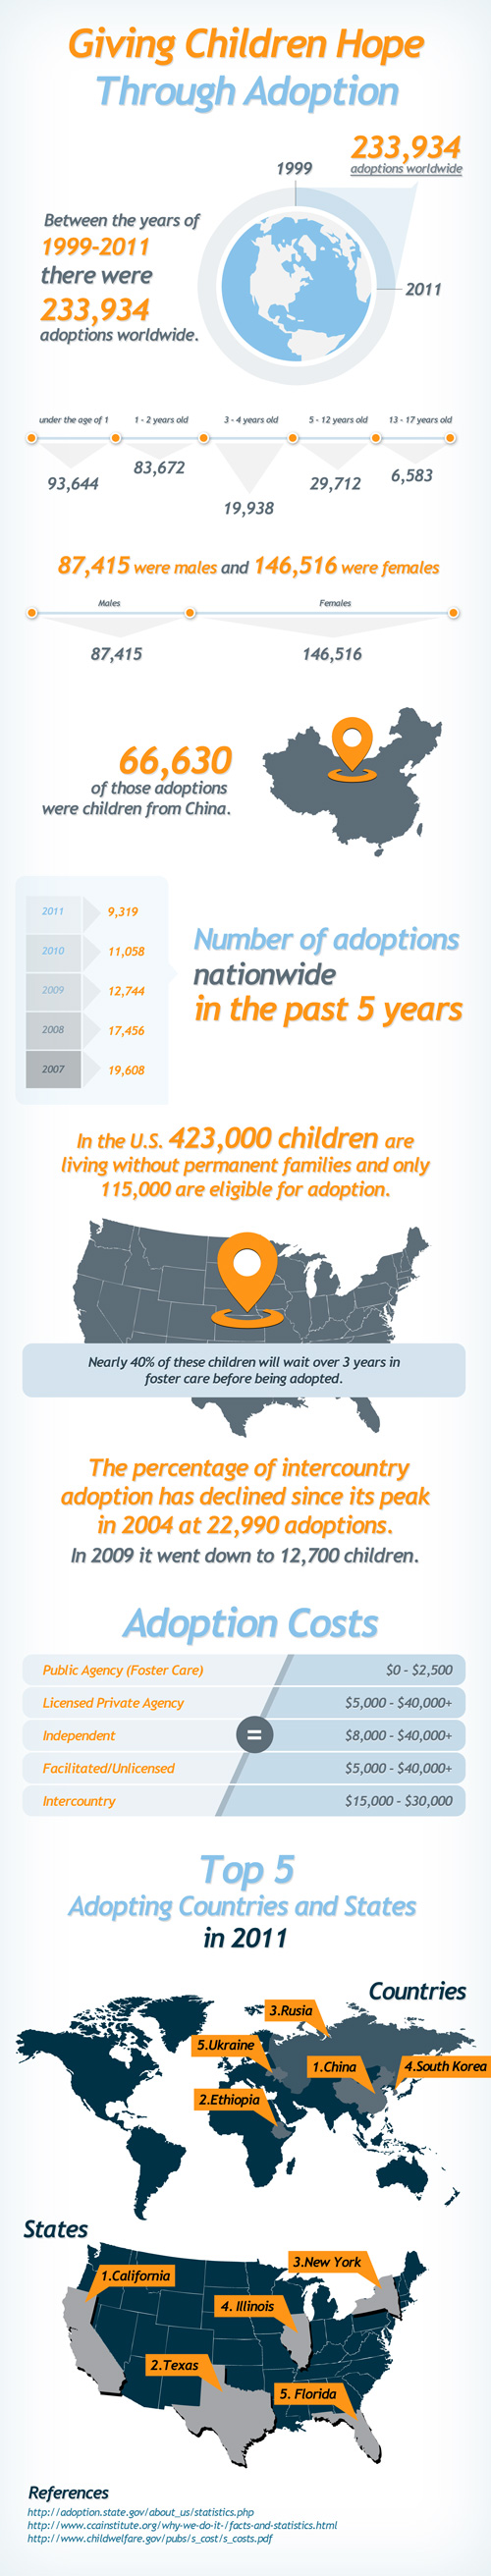 Giving children hope through adoption